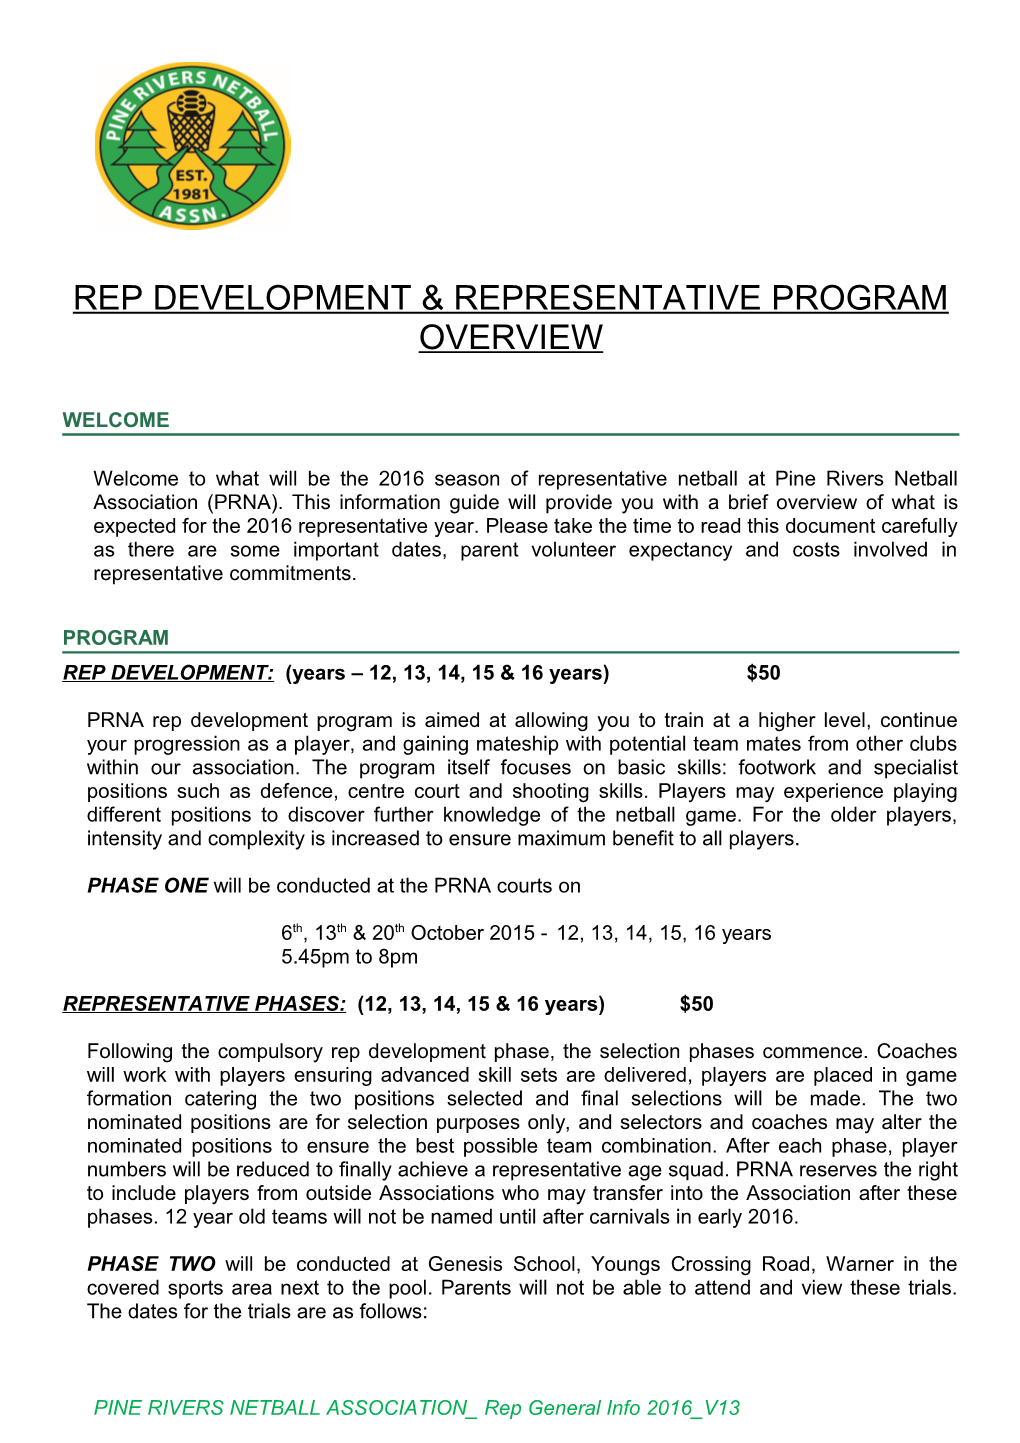 Rep Development & Representative Program Overview